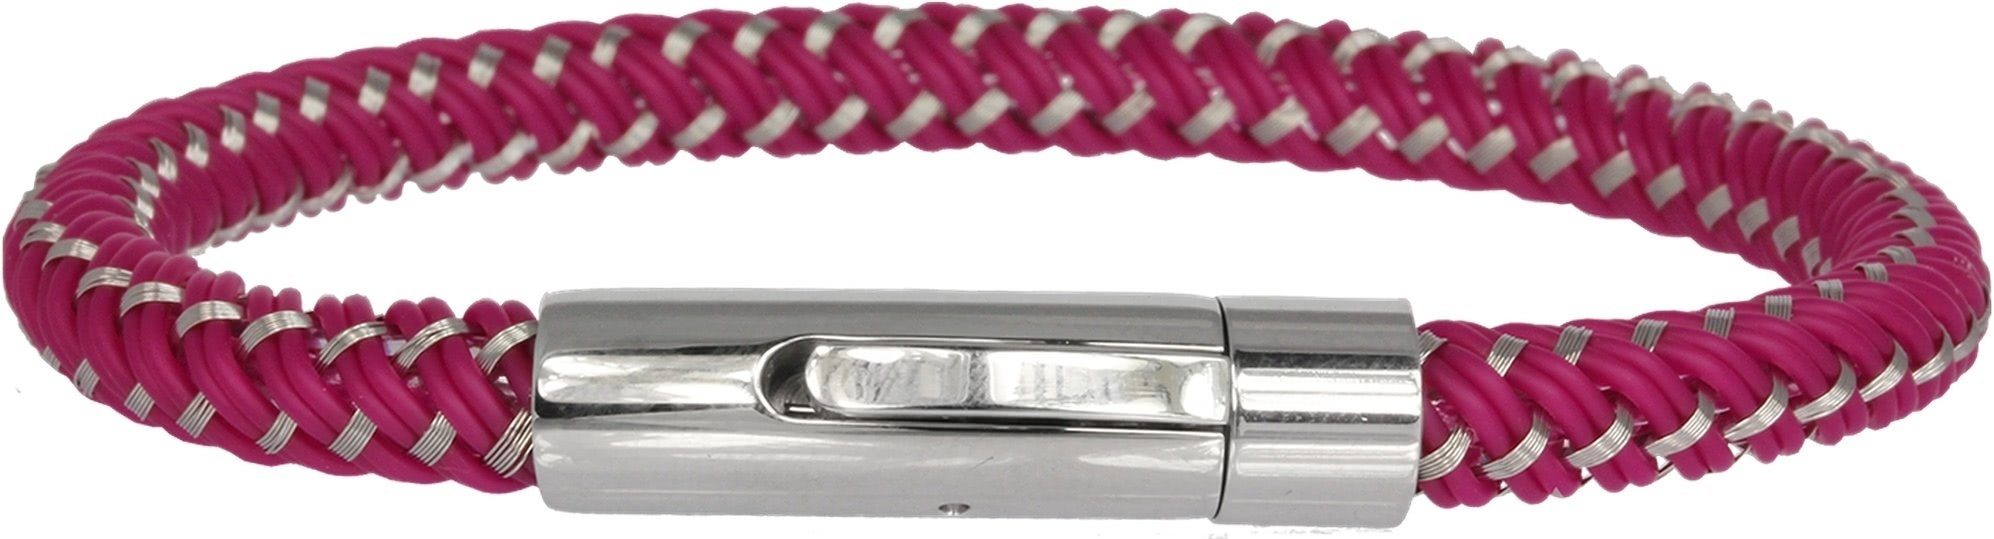 SilberDream Edelstahlarmband SilberDream Steel), silber aus 20cm, Edelstahl (Geflecht) Armband Damen (Stainless Armband (Armband), pink ca. Fa